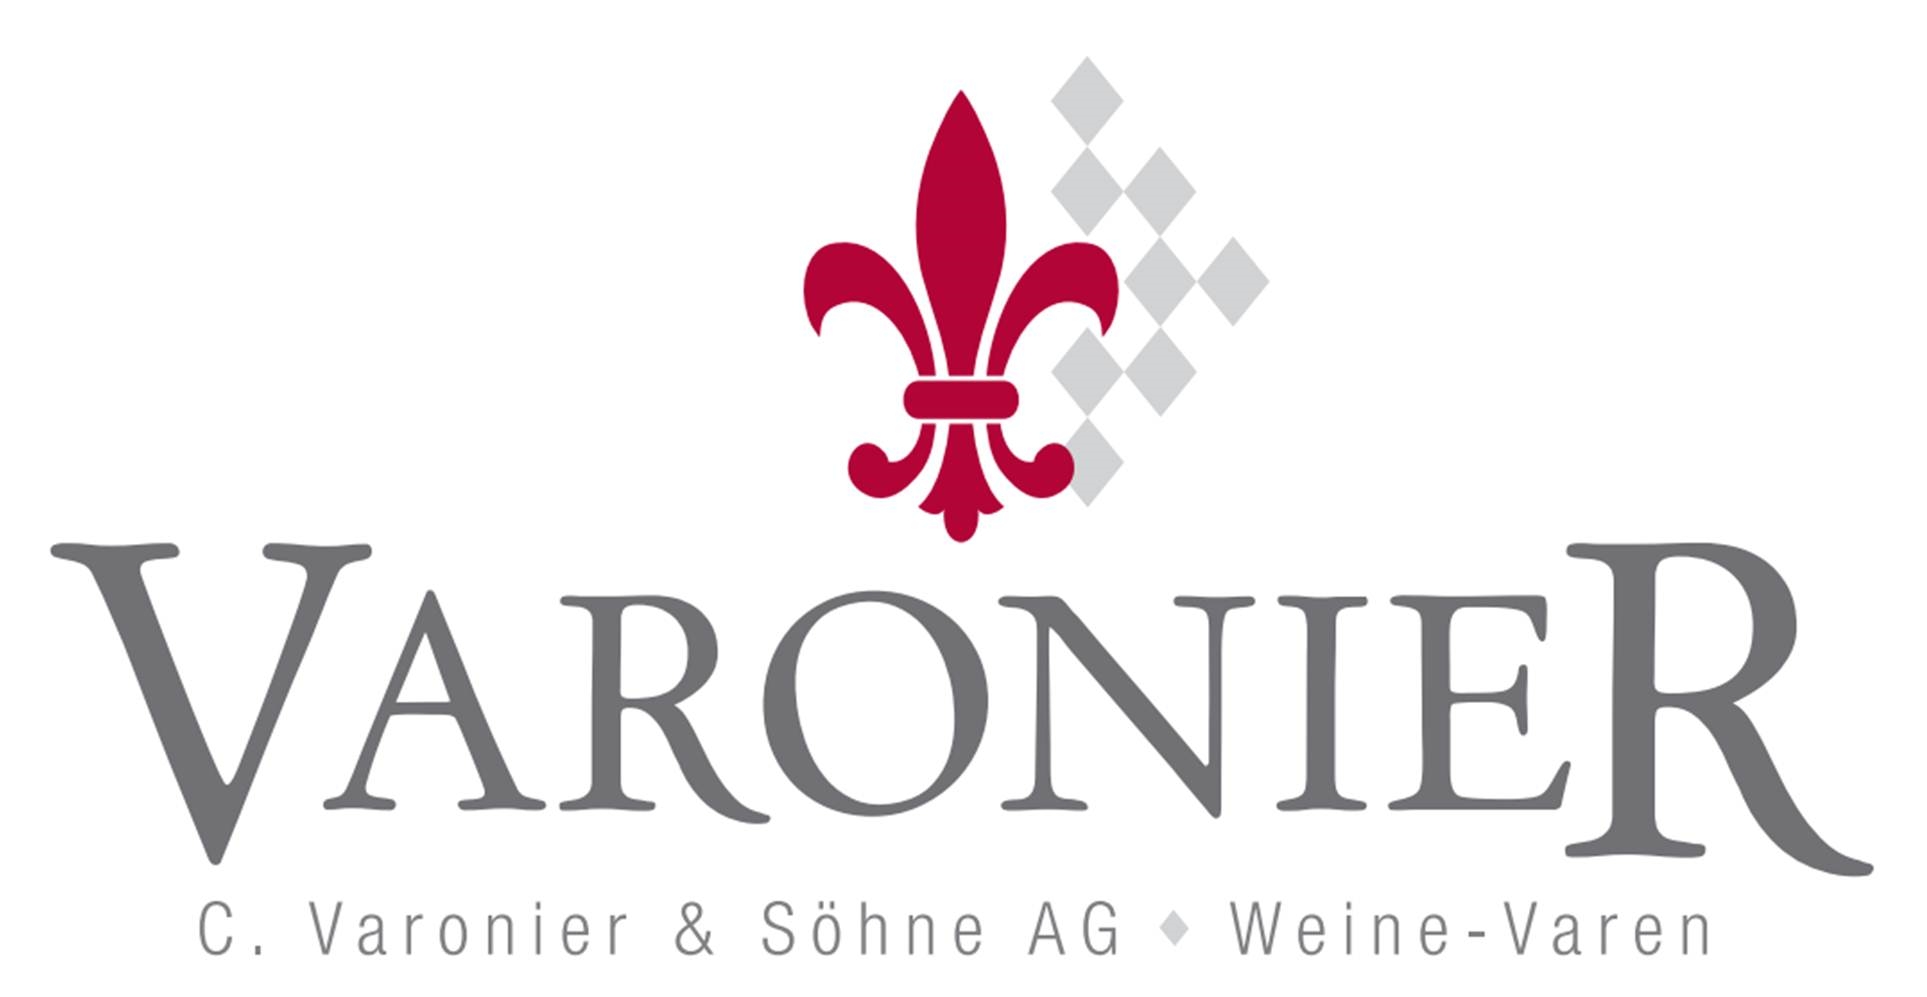 C. Varonier & Söhne AG